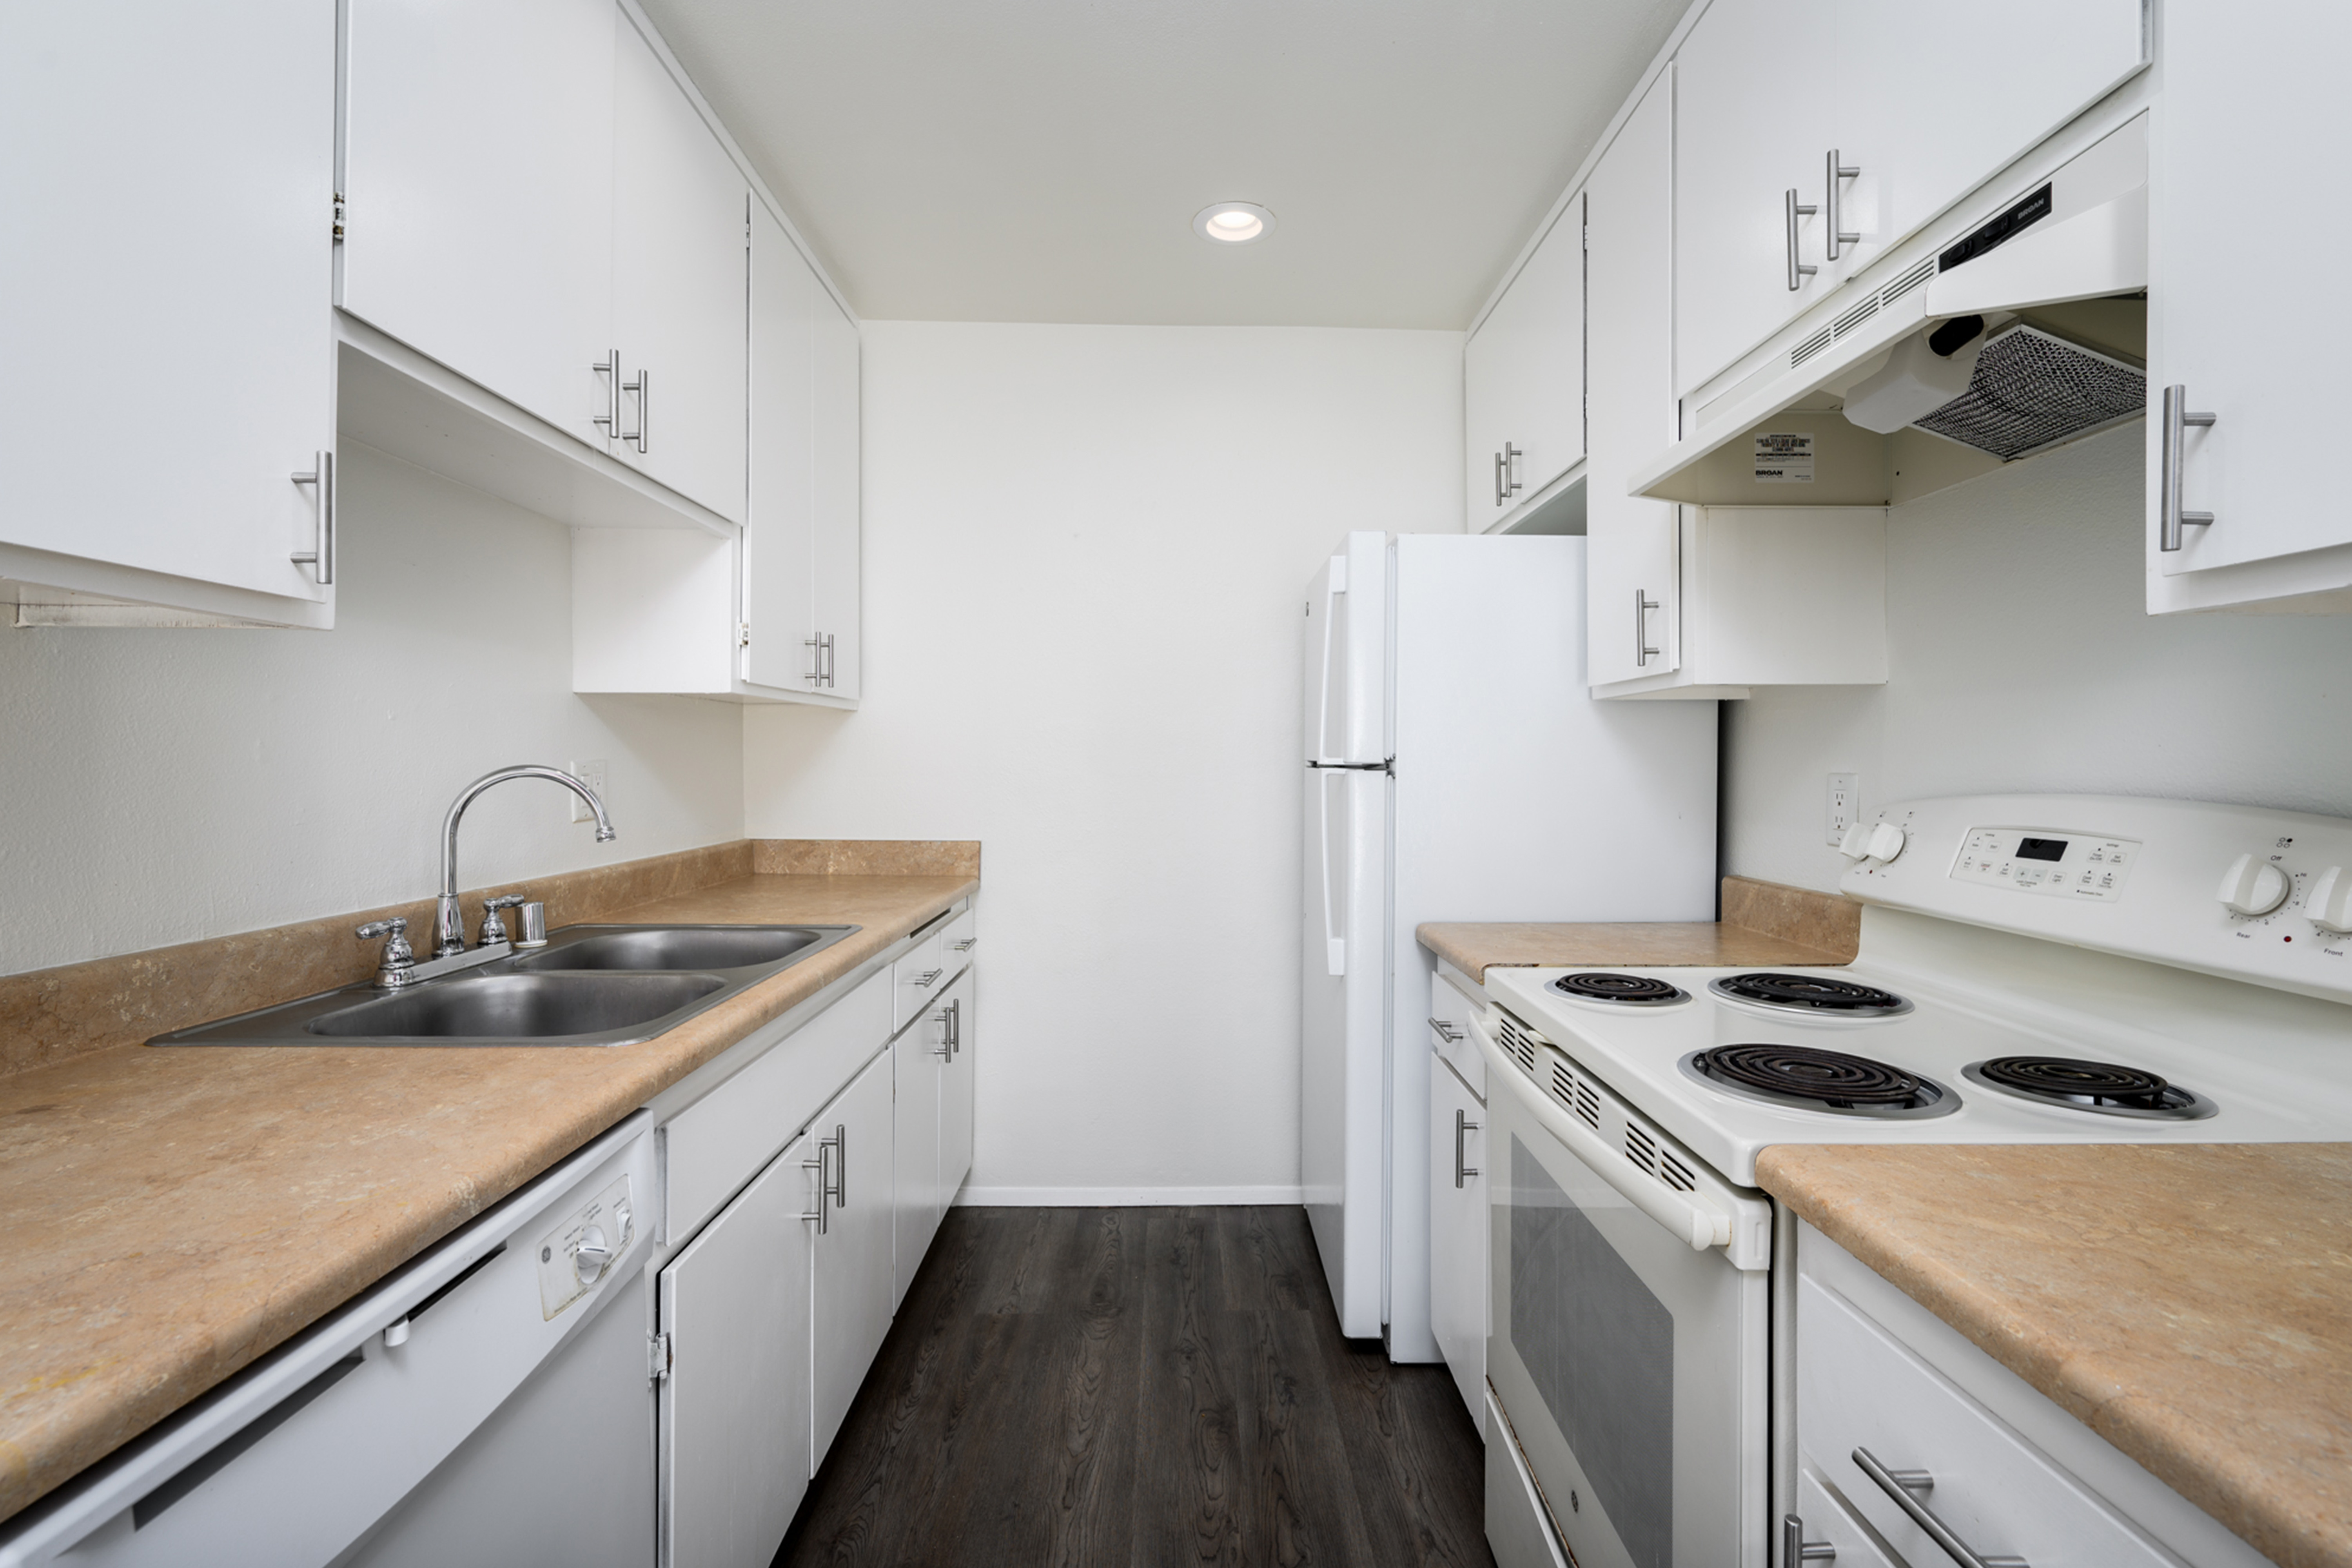 This image displays Amenites Gourmet Kitchen image in Shadow Glen Apartments.